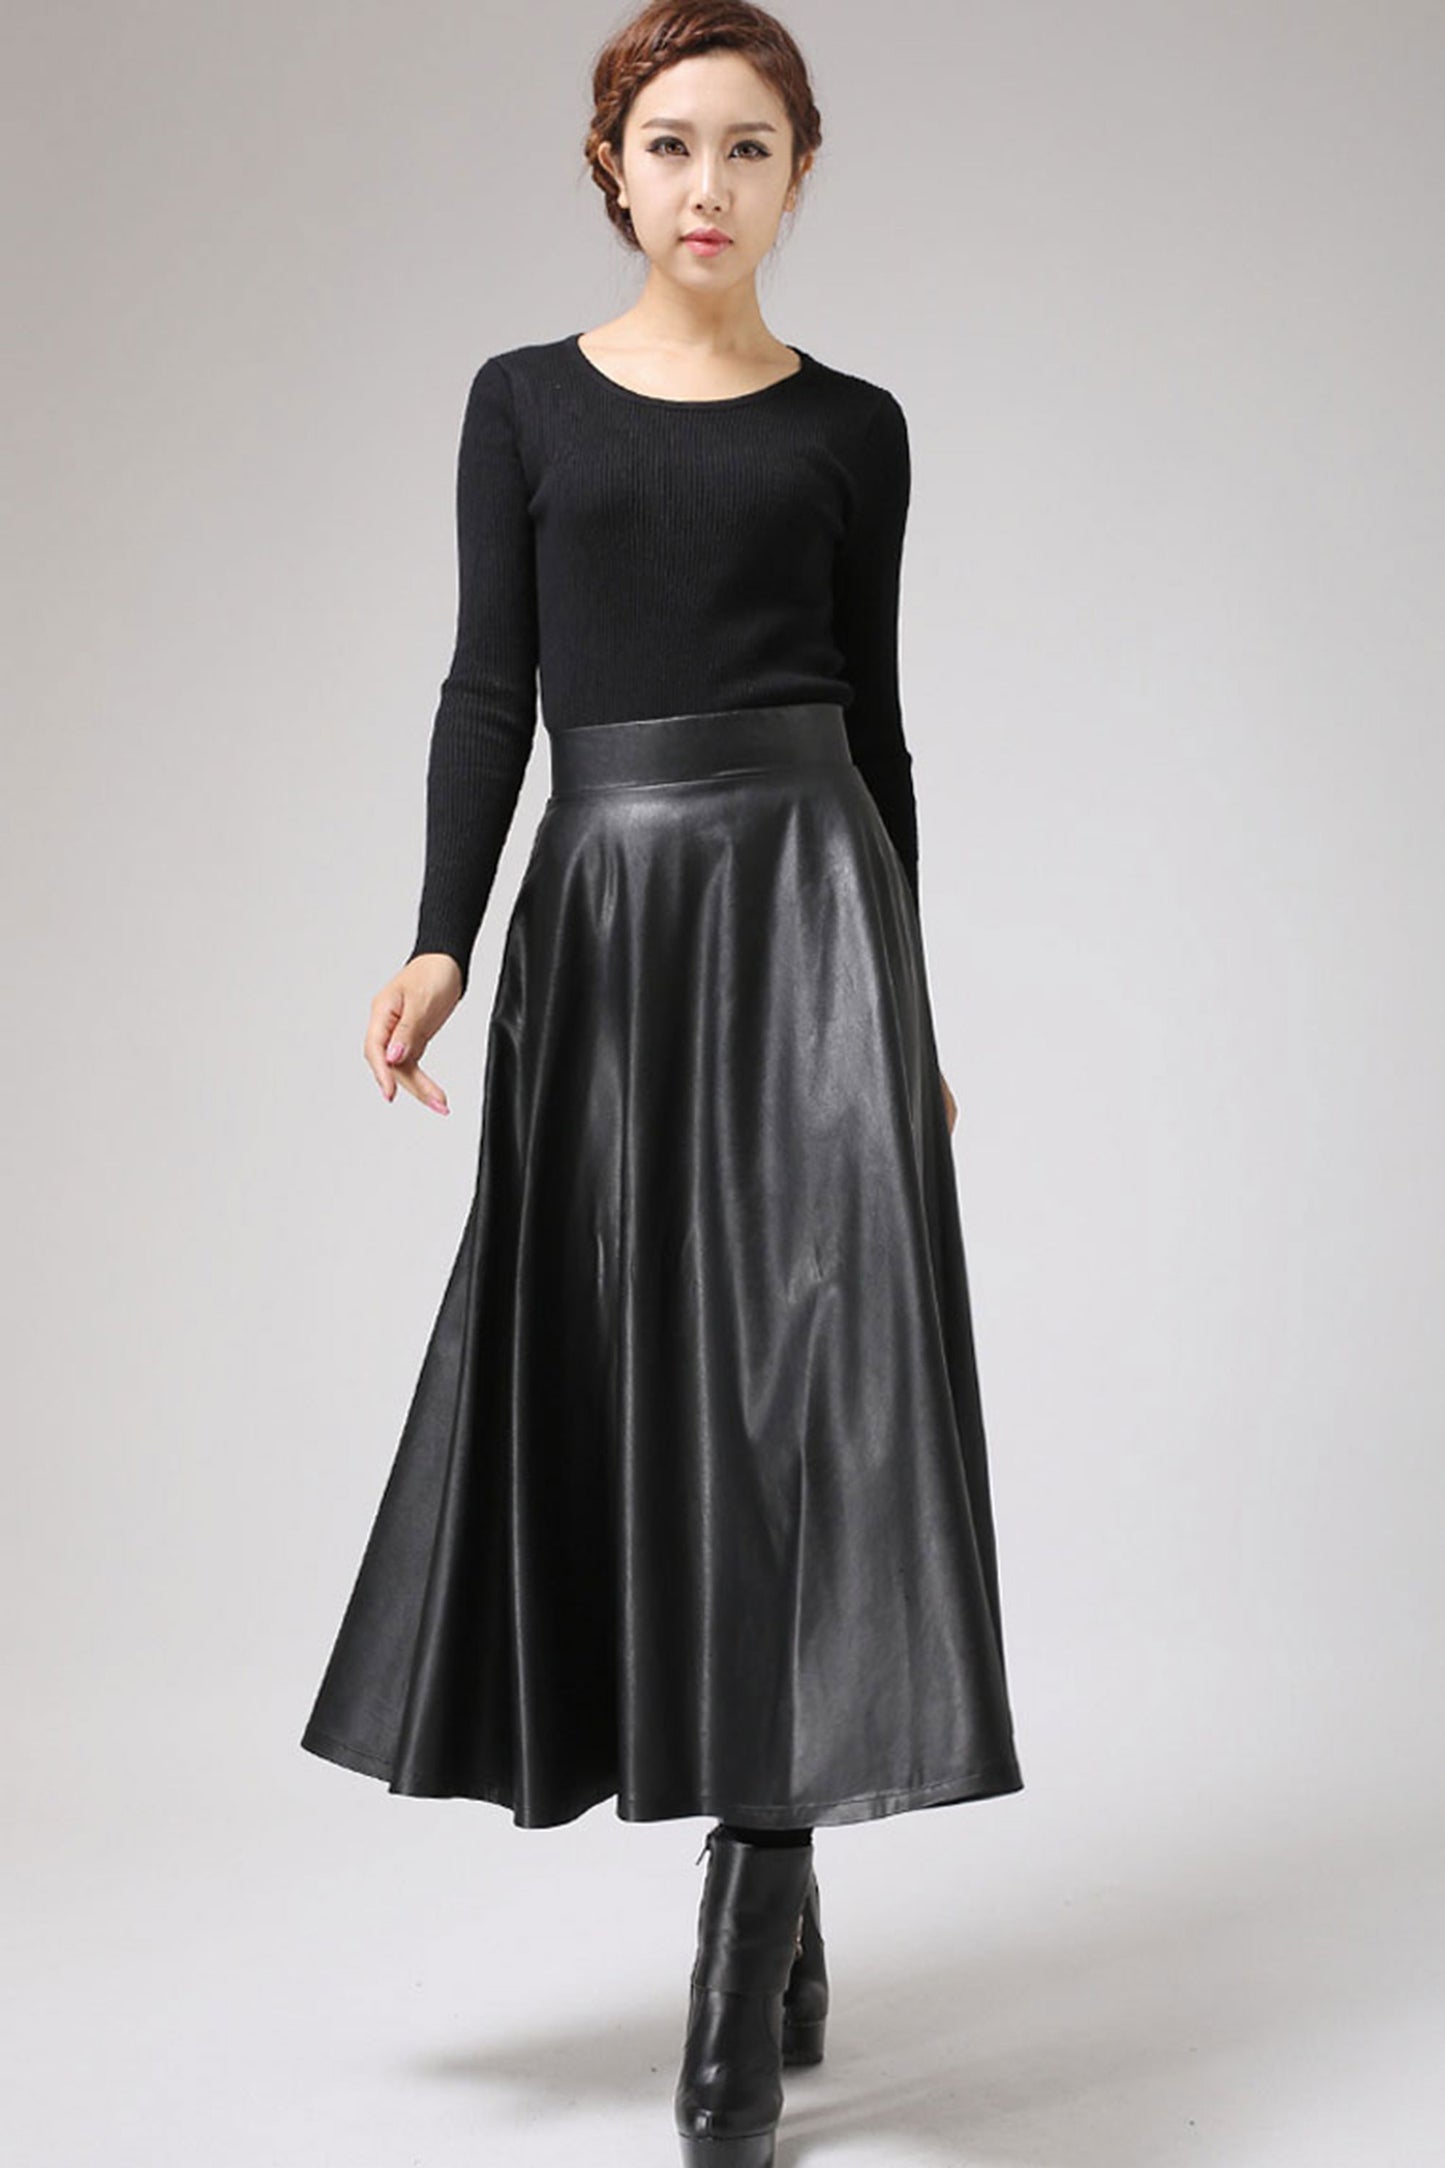 Black PU skirt maxi skirt long skirt 0719